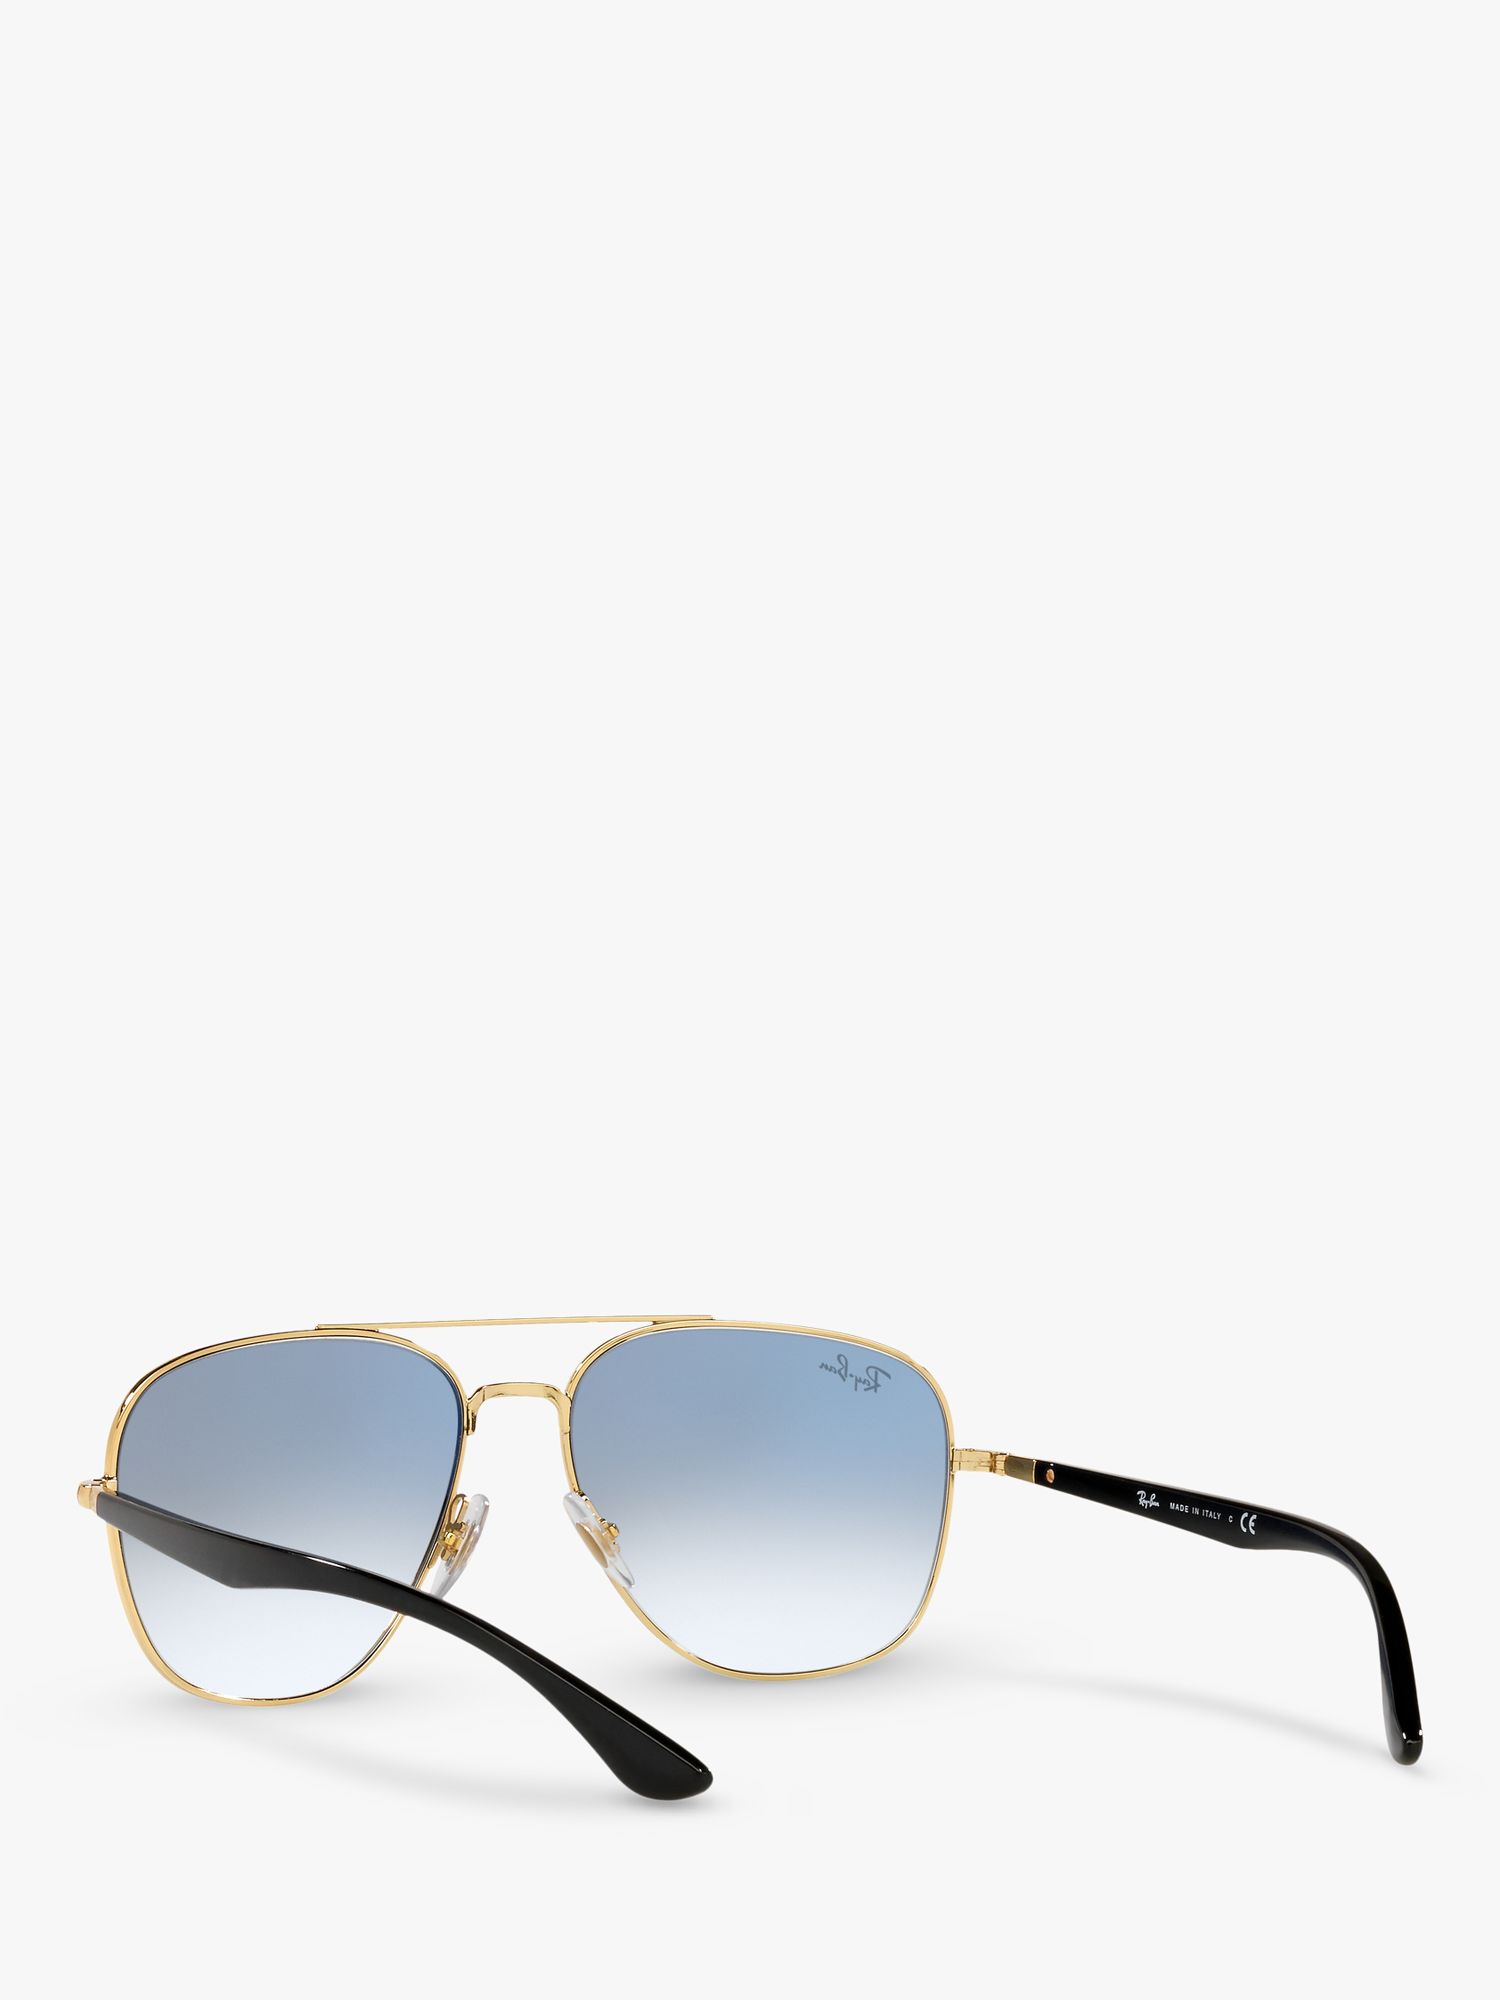 Ray-Ban RB3683 Unisex Square Sunglasses, Shiny Black/Blue Gradient at ...